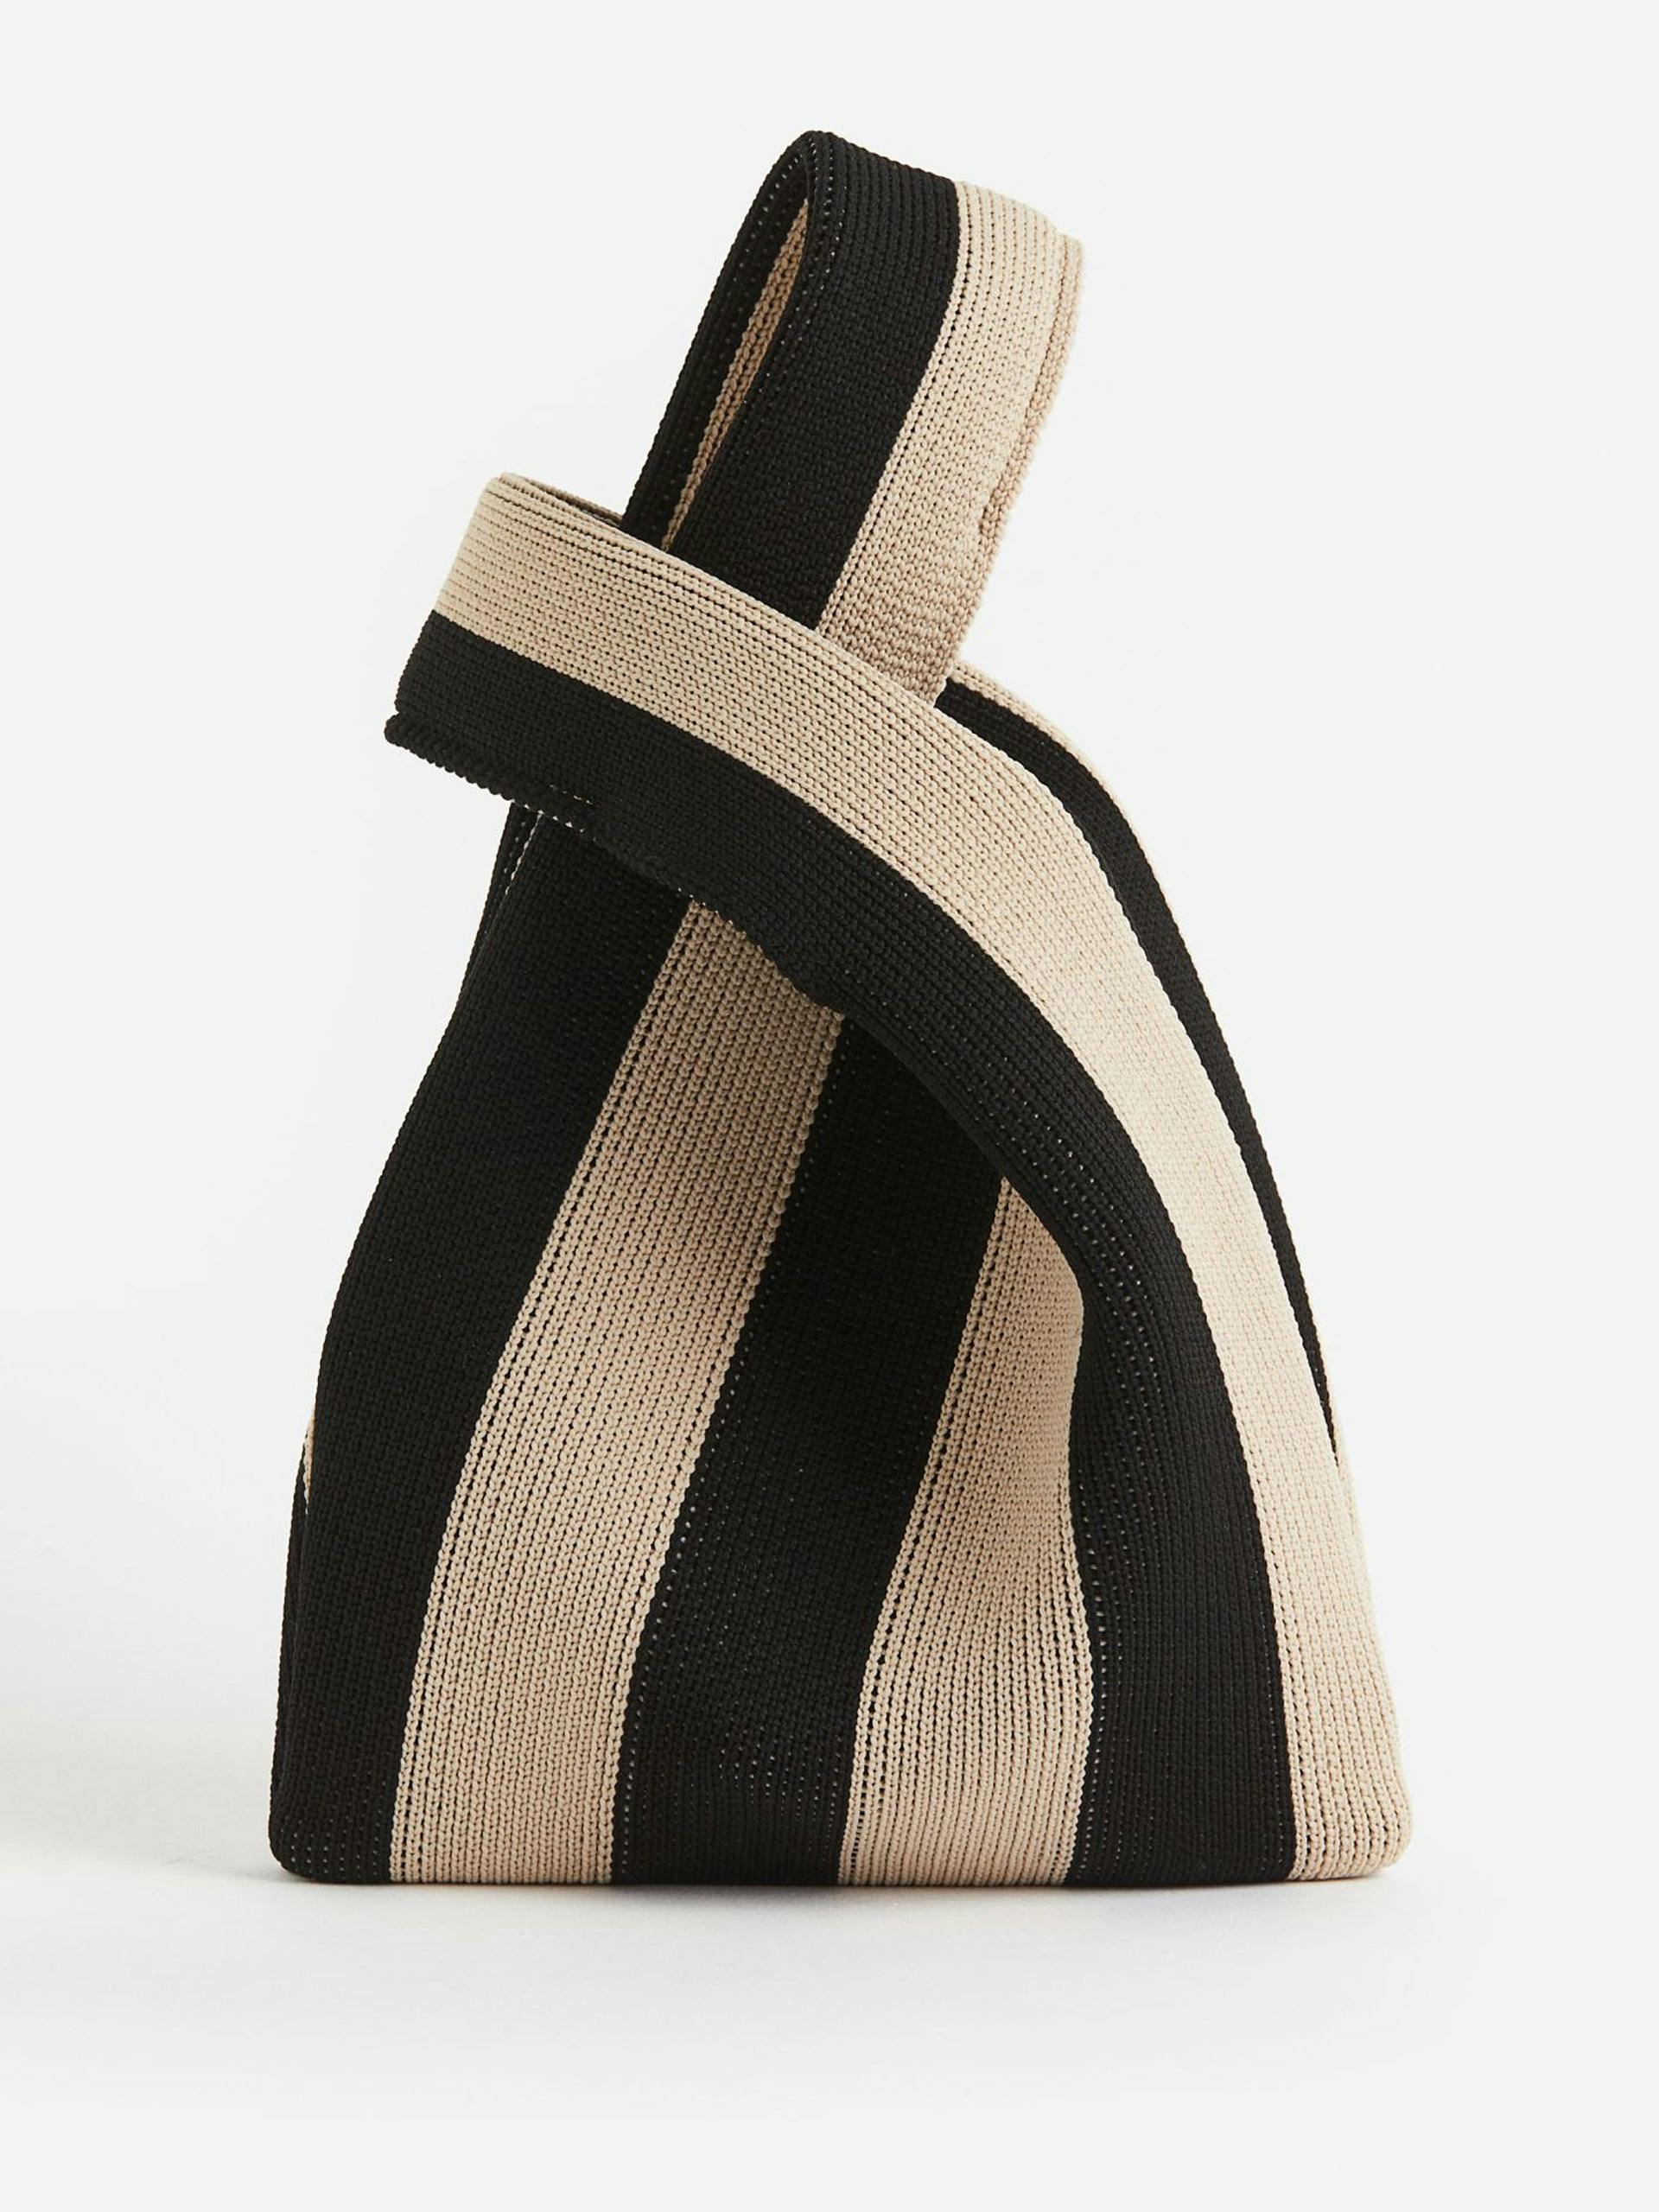 Black/beige striped mini top-handle bag